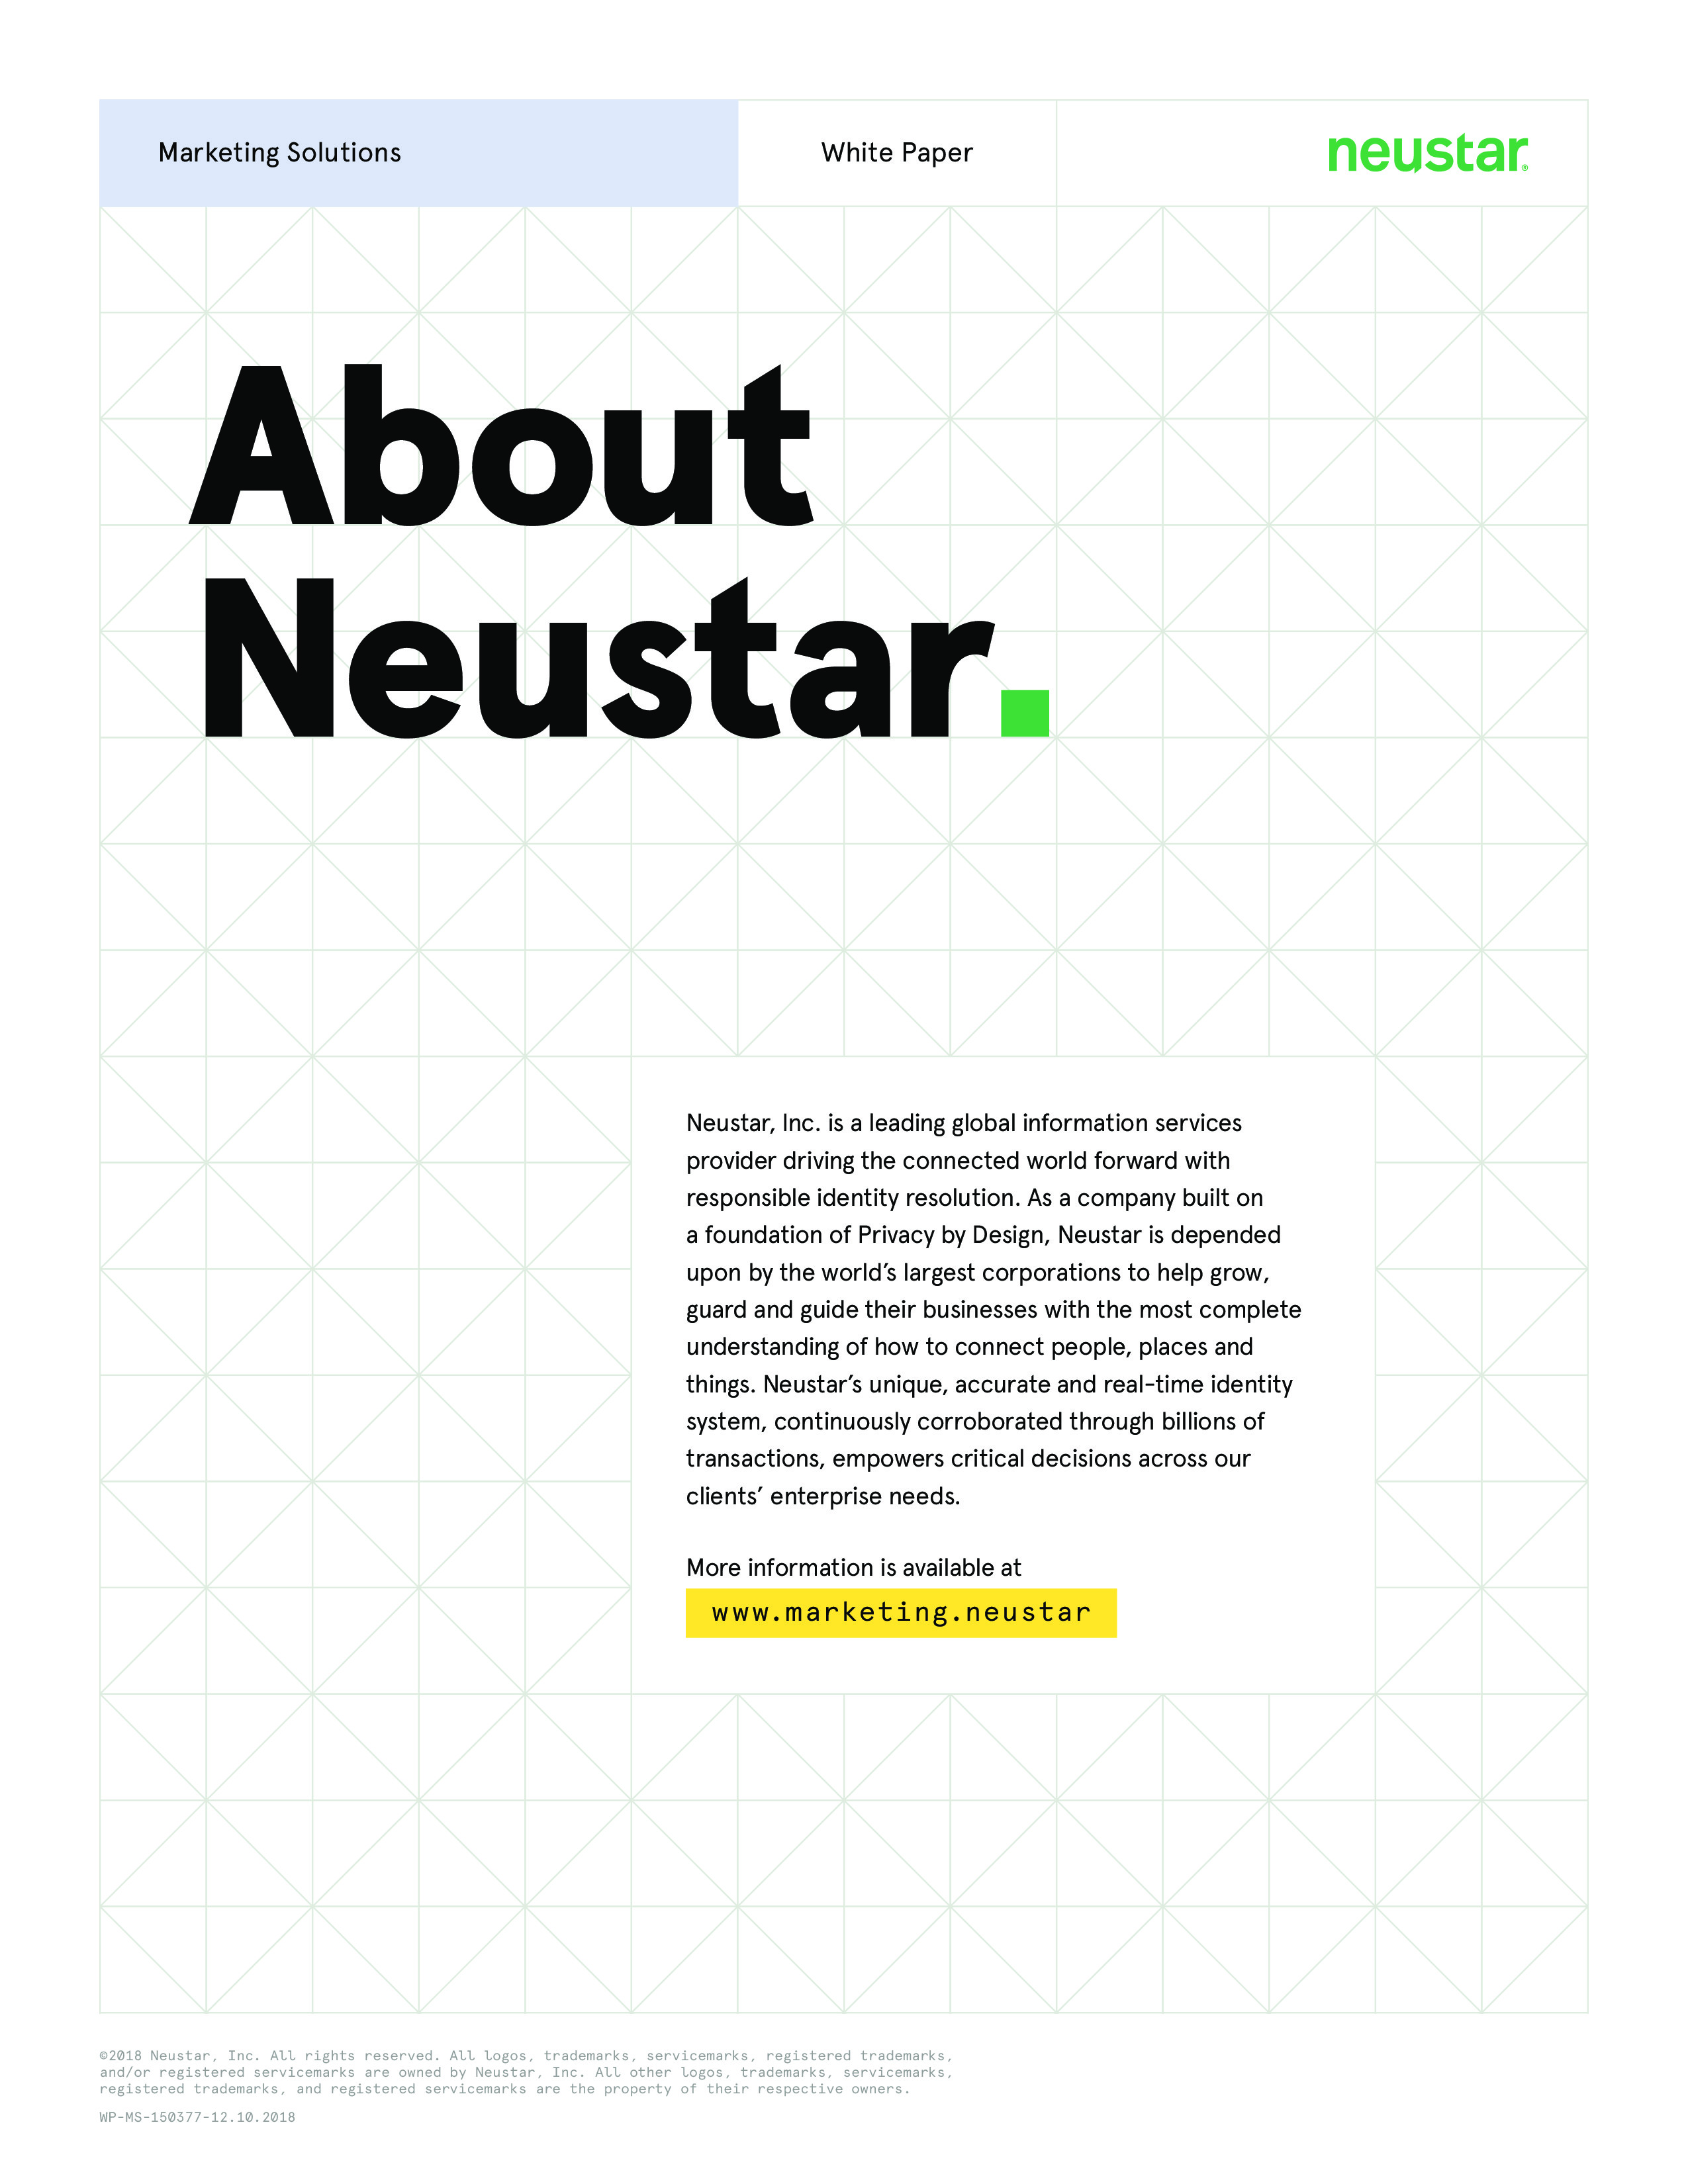 Neustar：电影营销预算报告